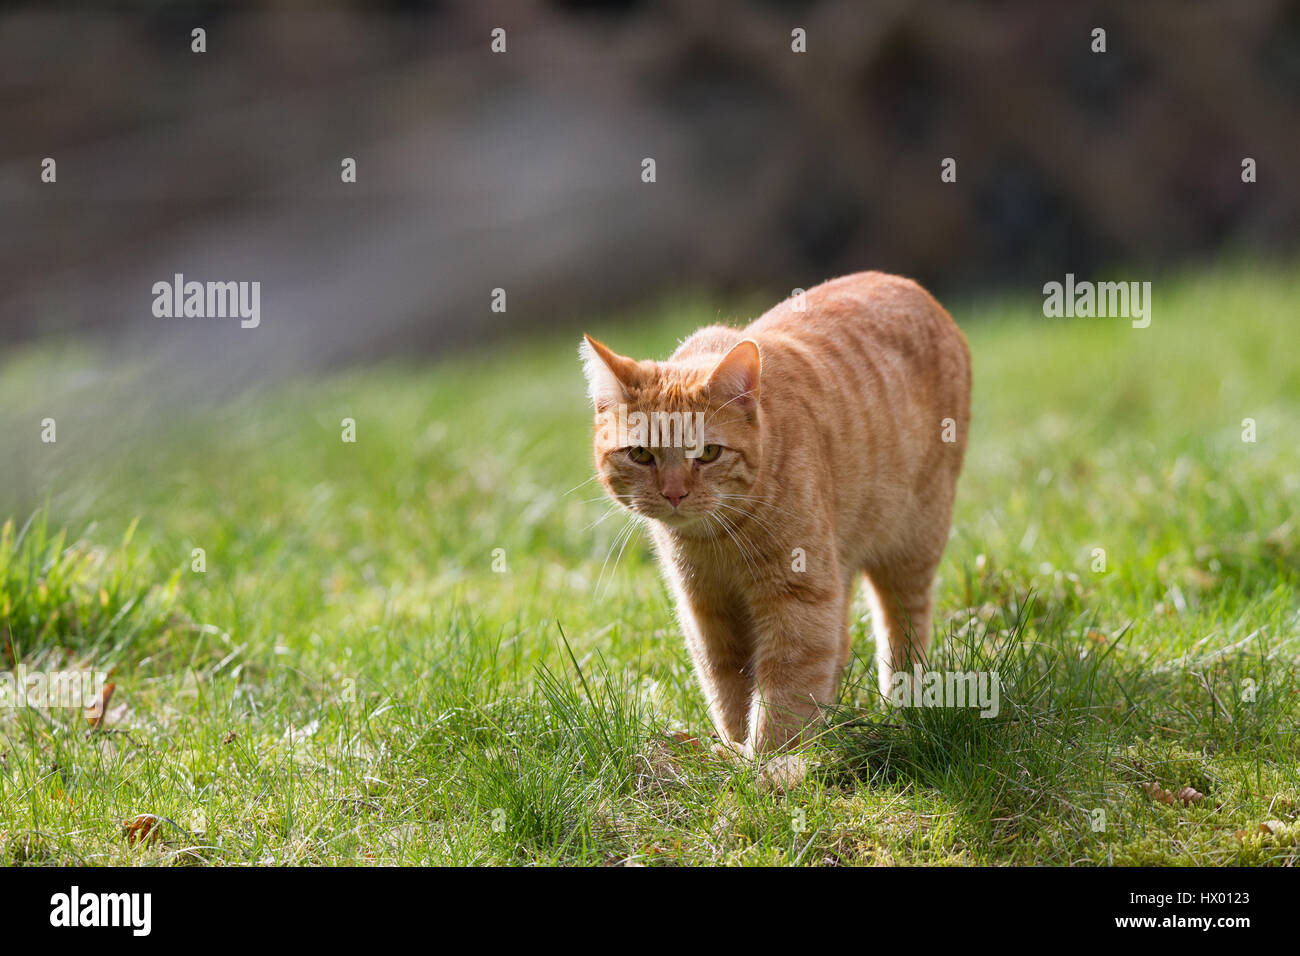 Ginger tom domestic cat (felis catus) walking through grass in garden Stock Photo